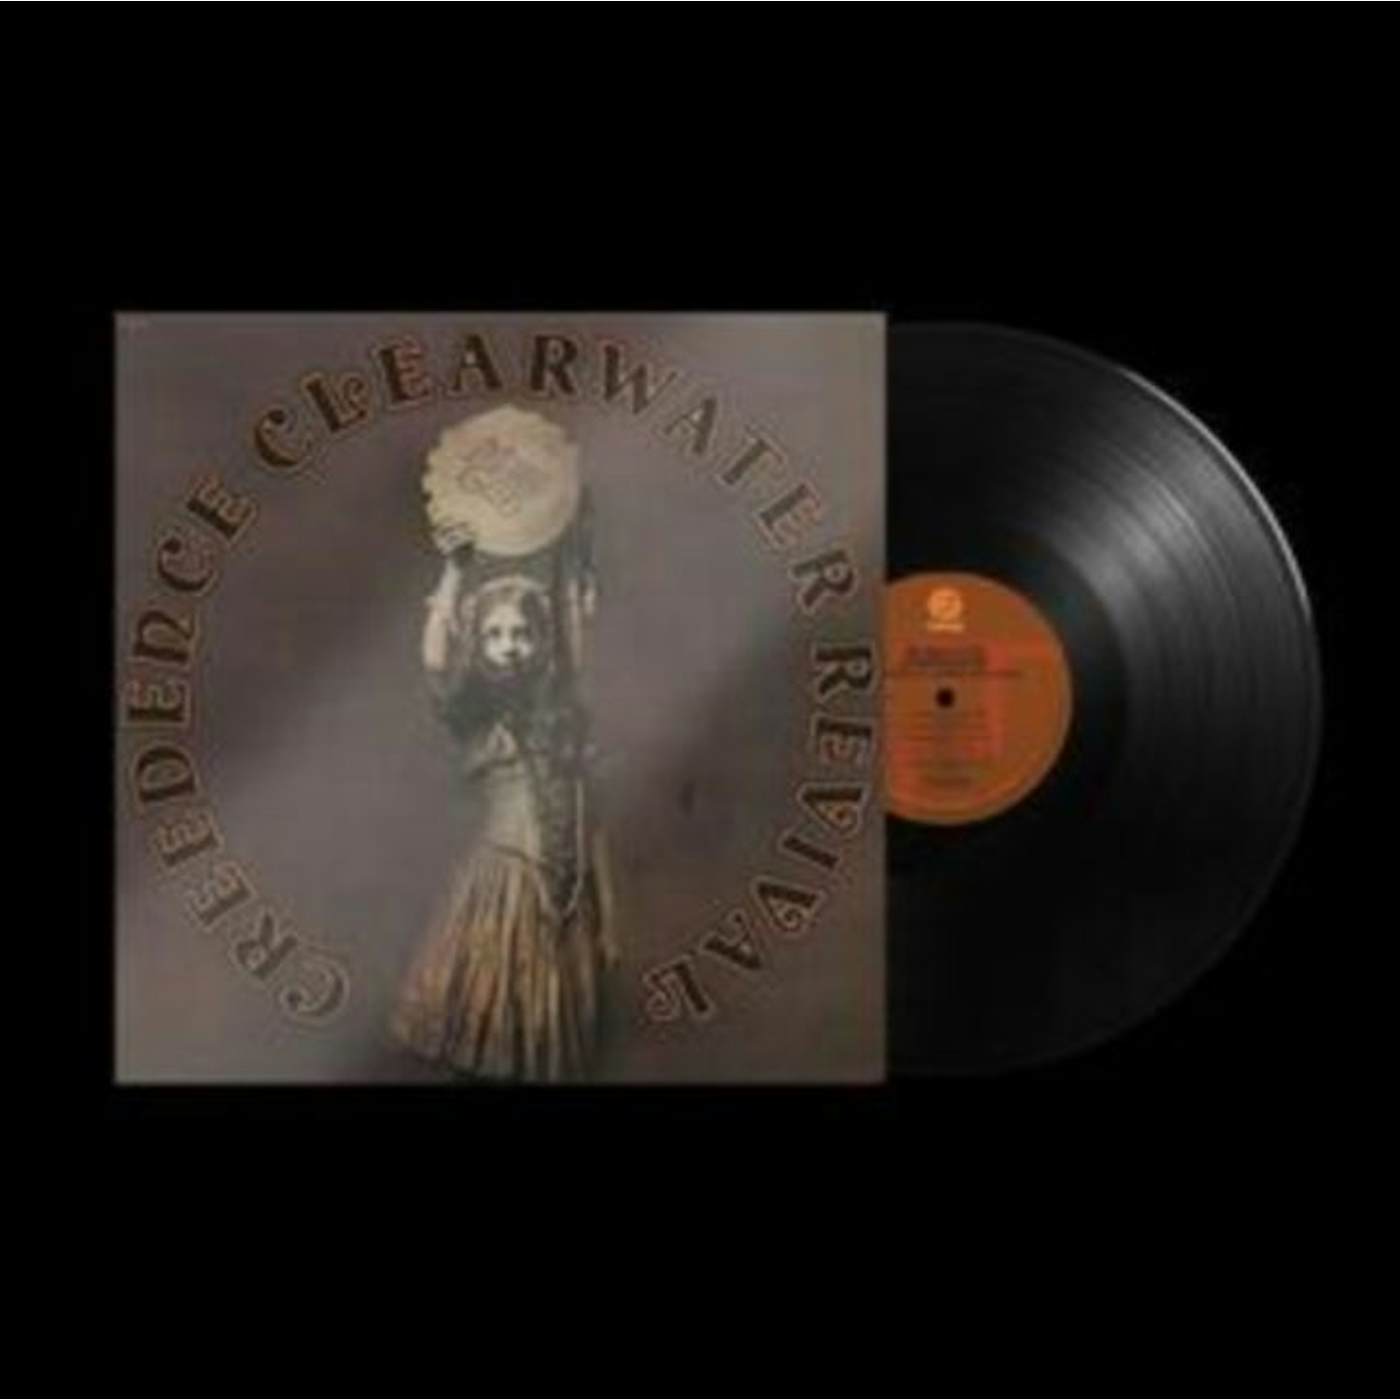 Creedence Clearwater Revival LP Vinyl Record - Mardi Gras (Half Speed Master)